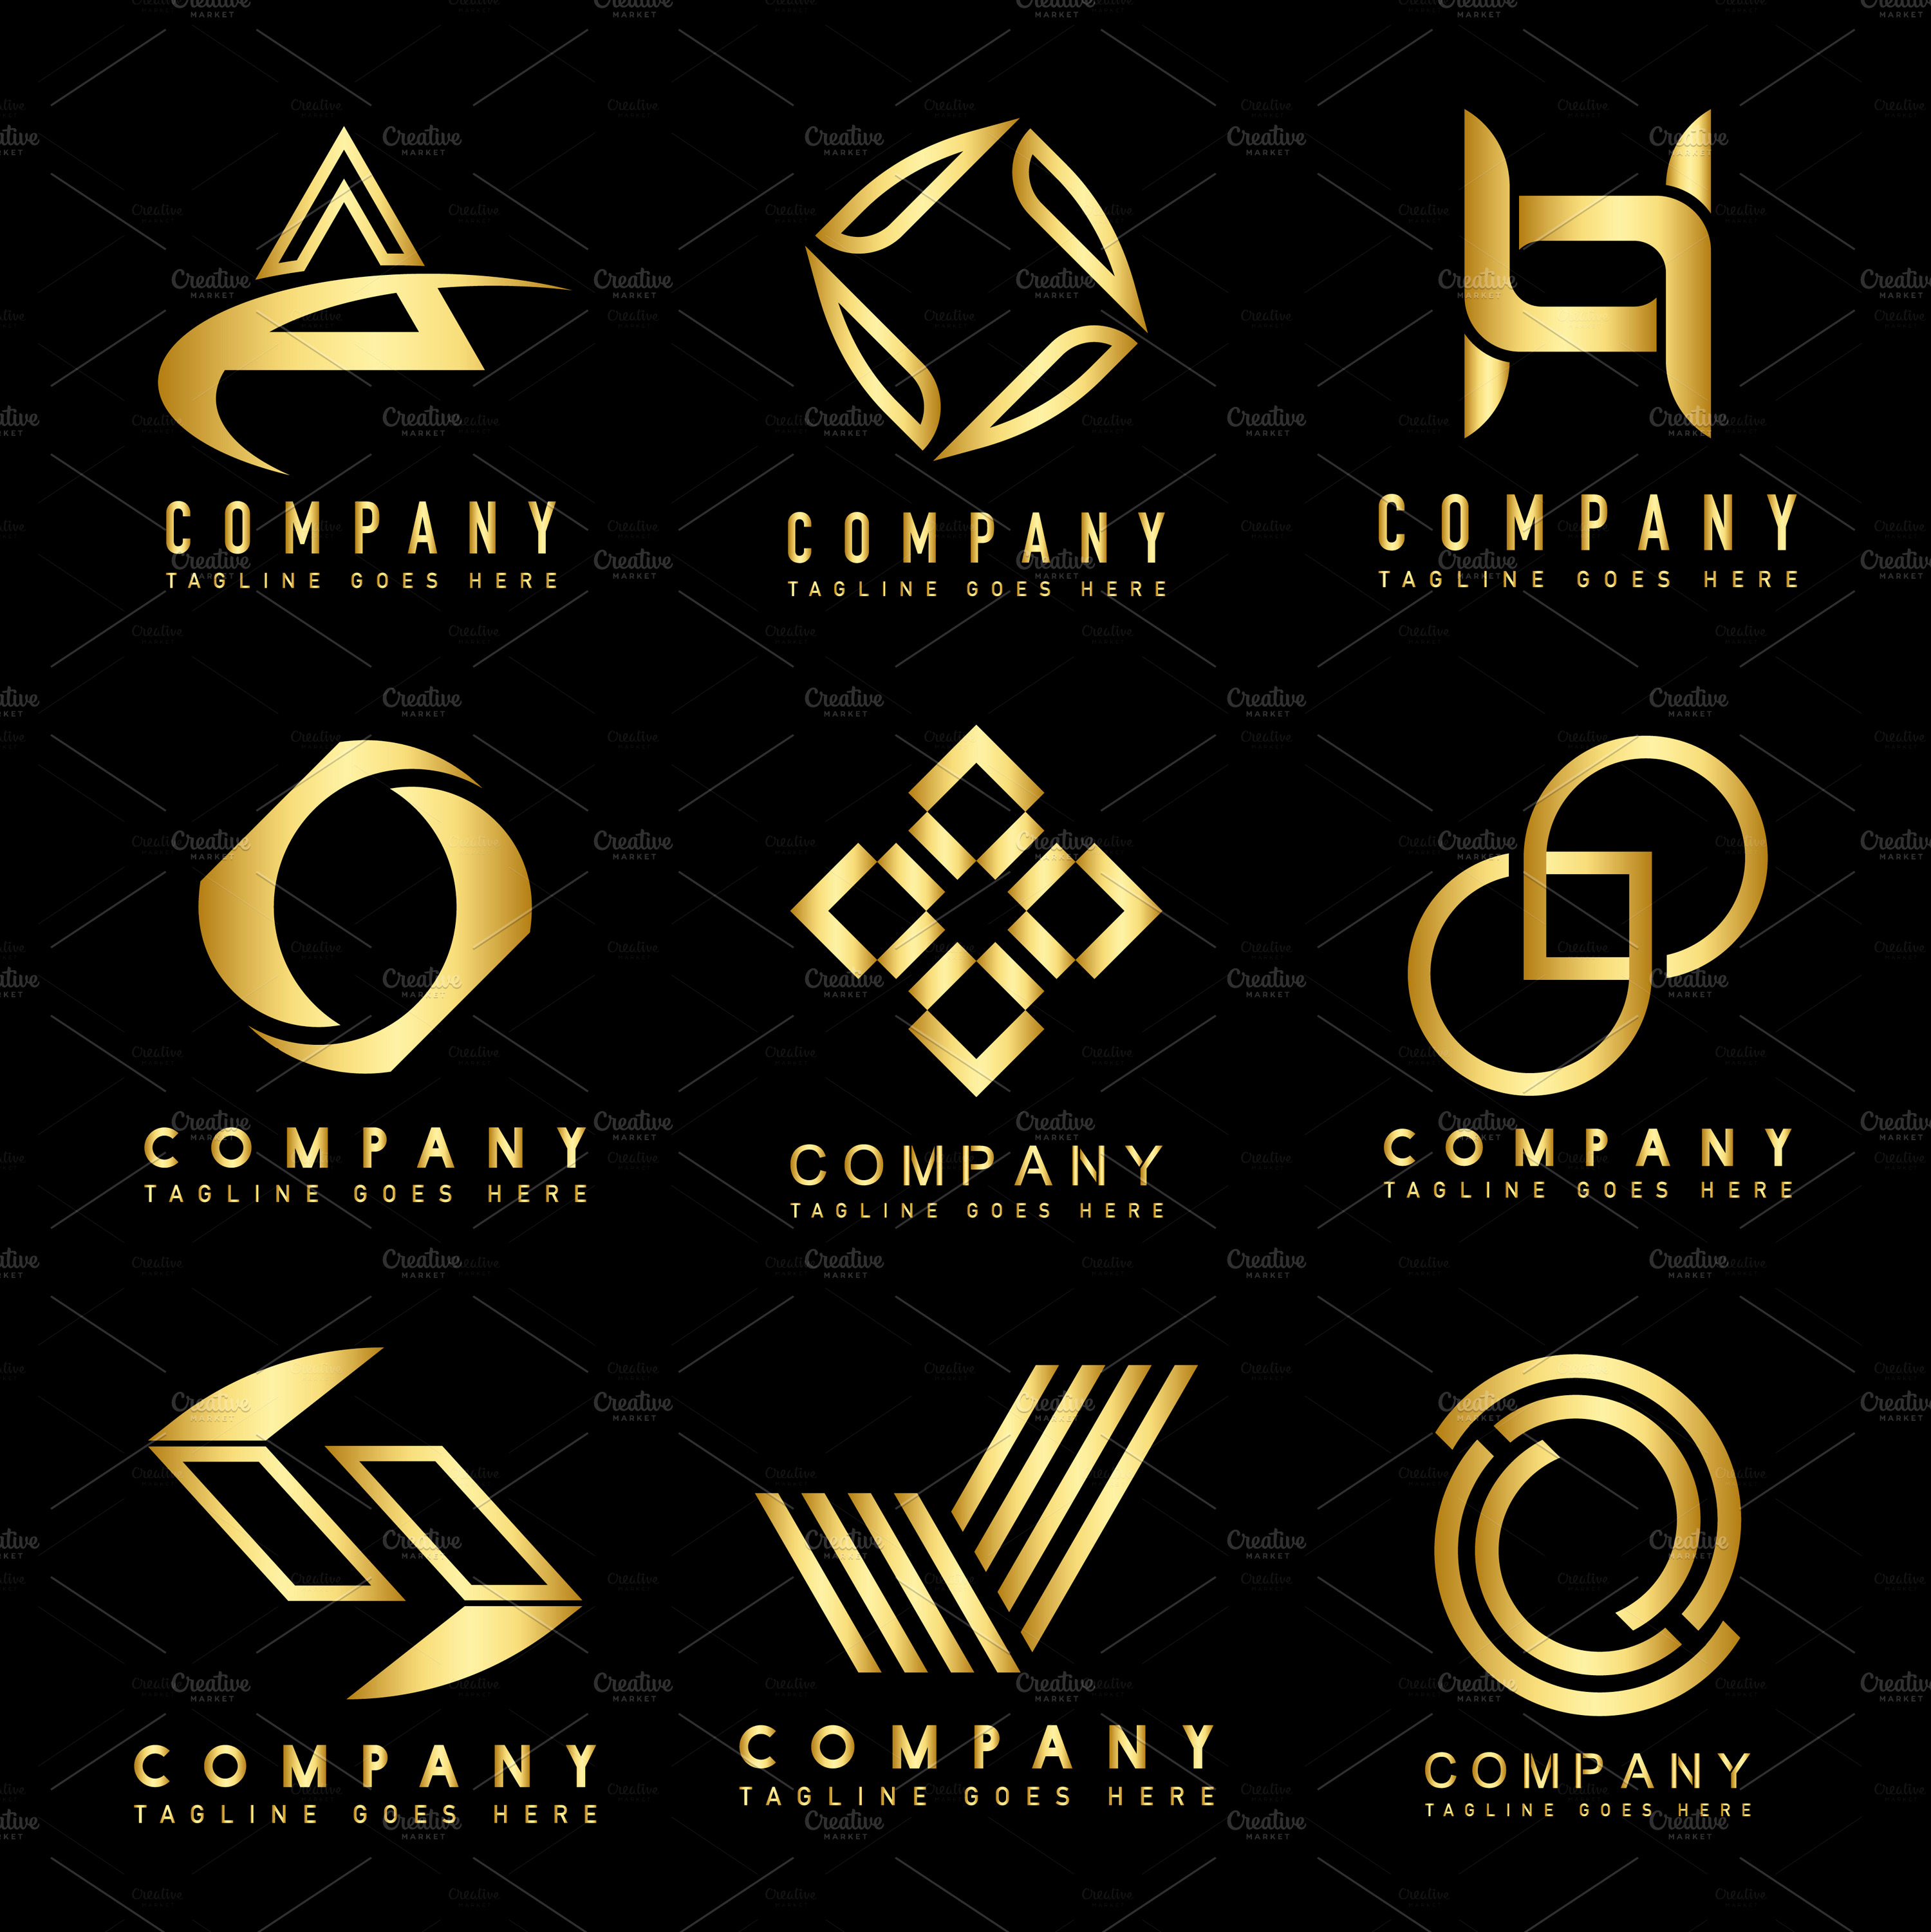 new-logo-design-ideas